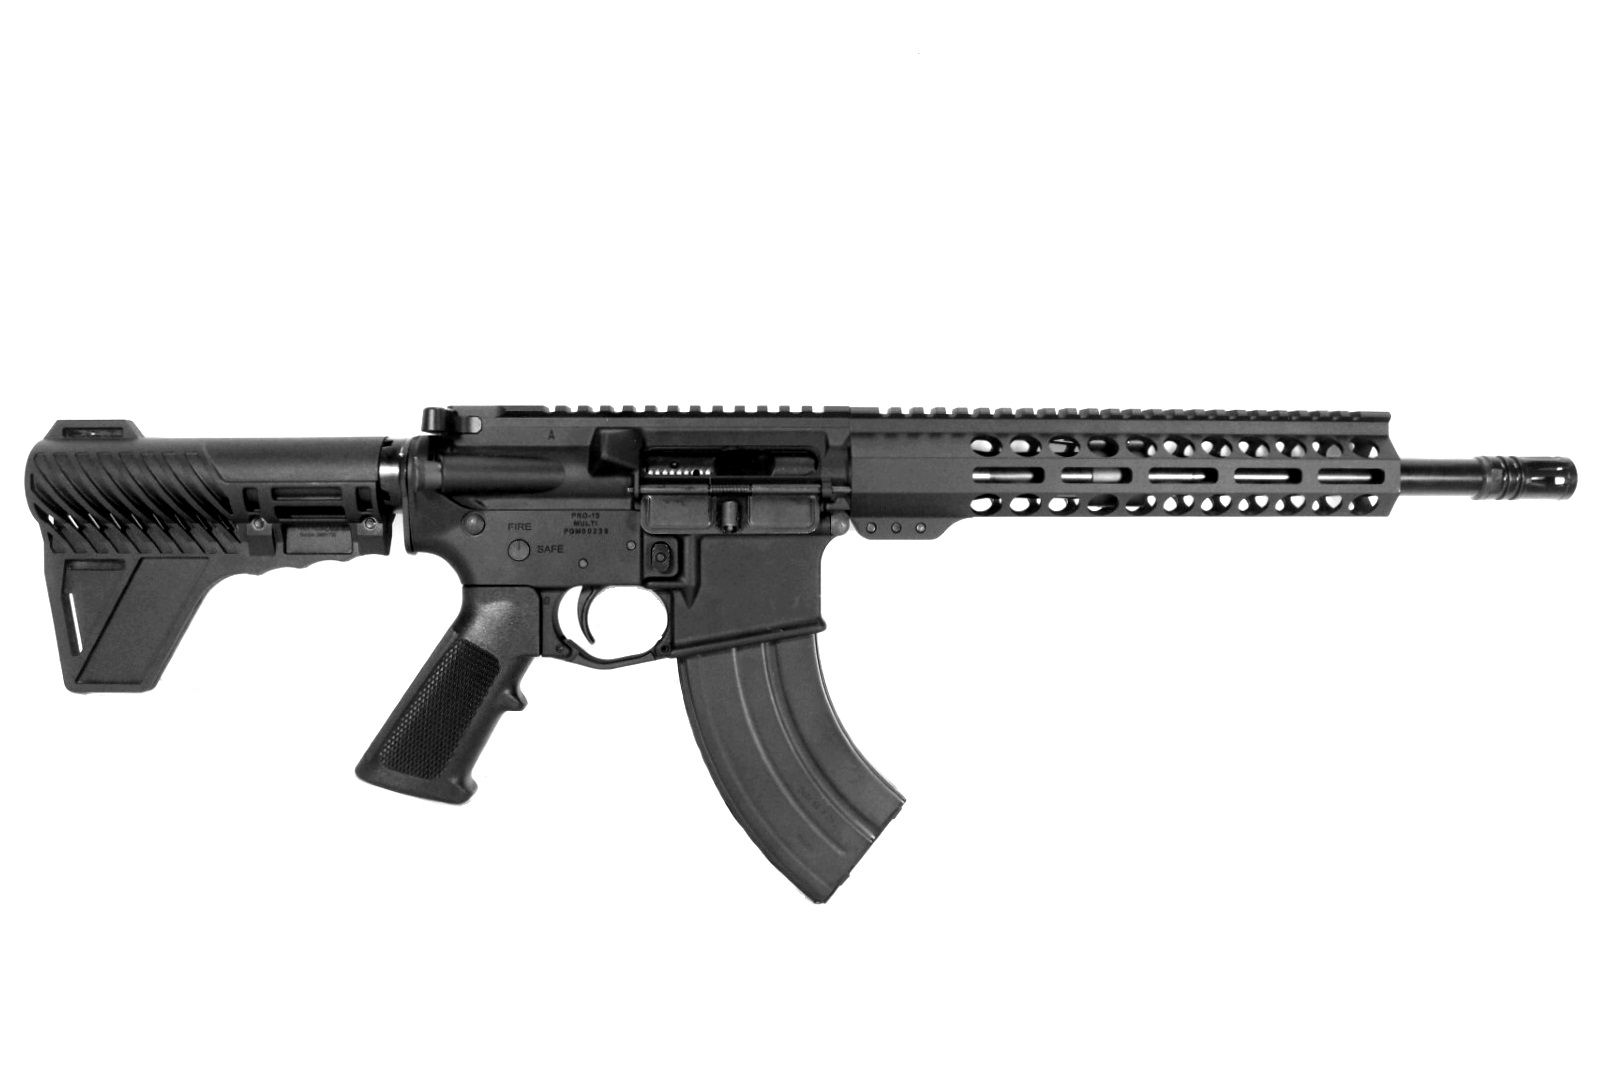 12.5 inch 9x39 Russian Caliber AR-15 Pistol | More Energy Than 300BLK